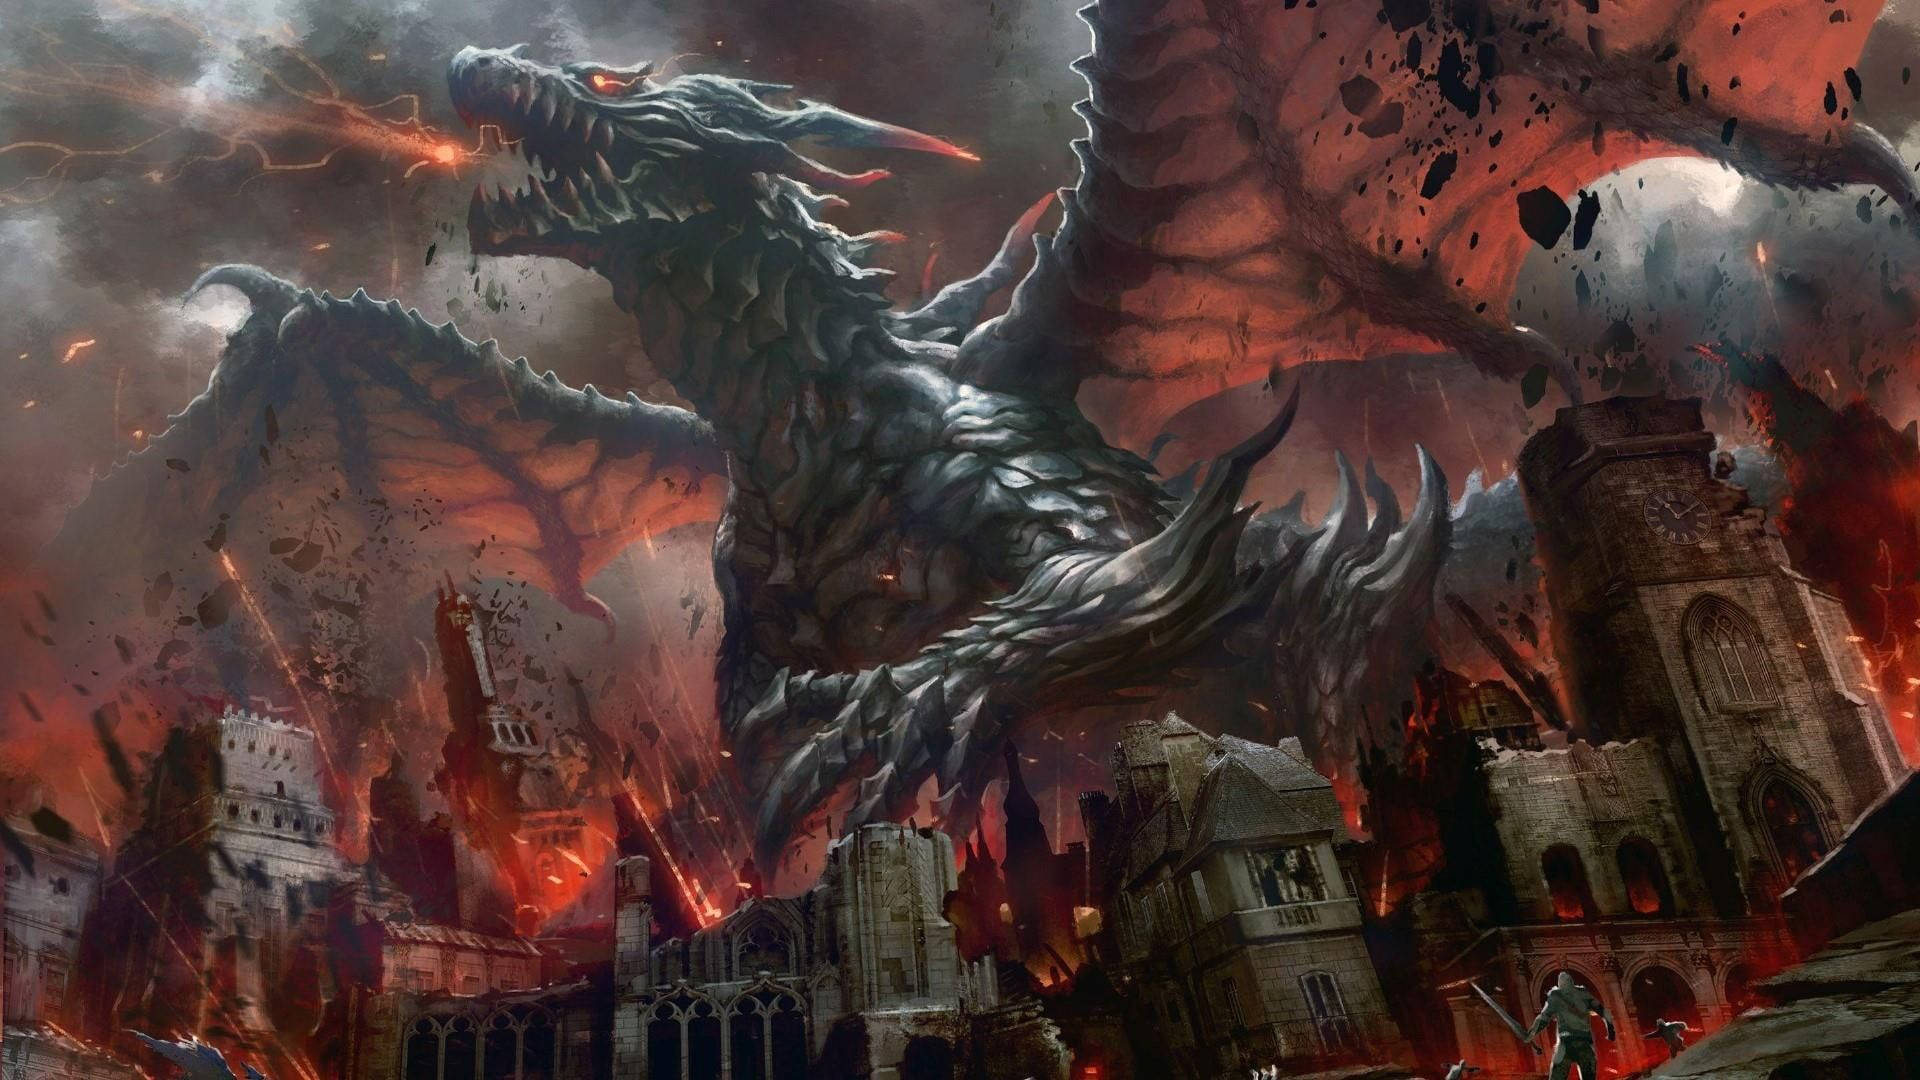 Fire Dragon Destroying City